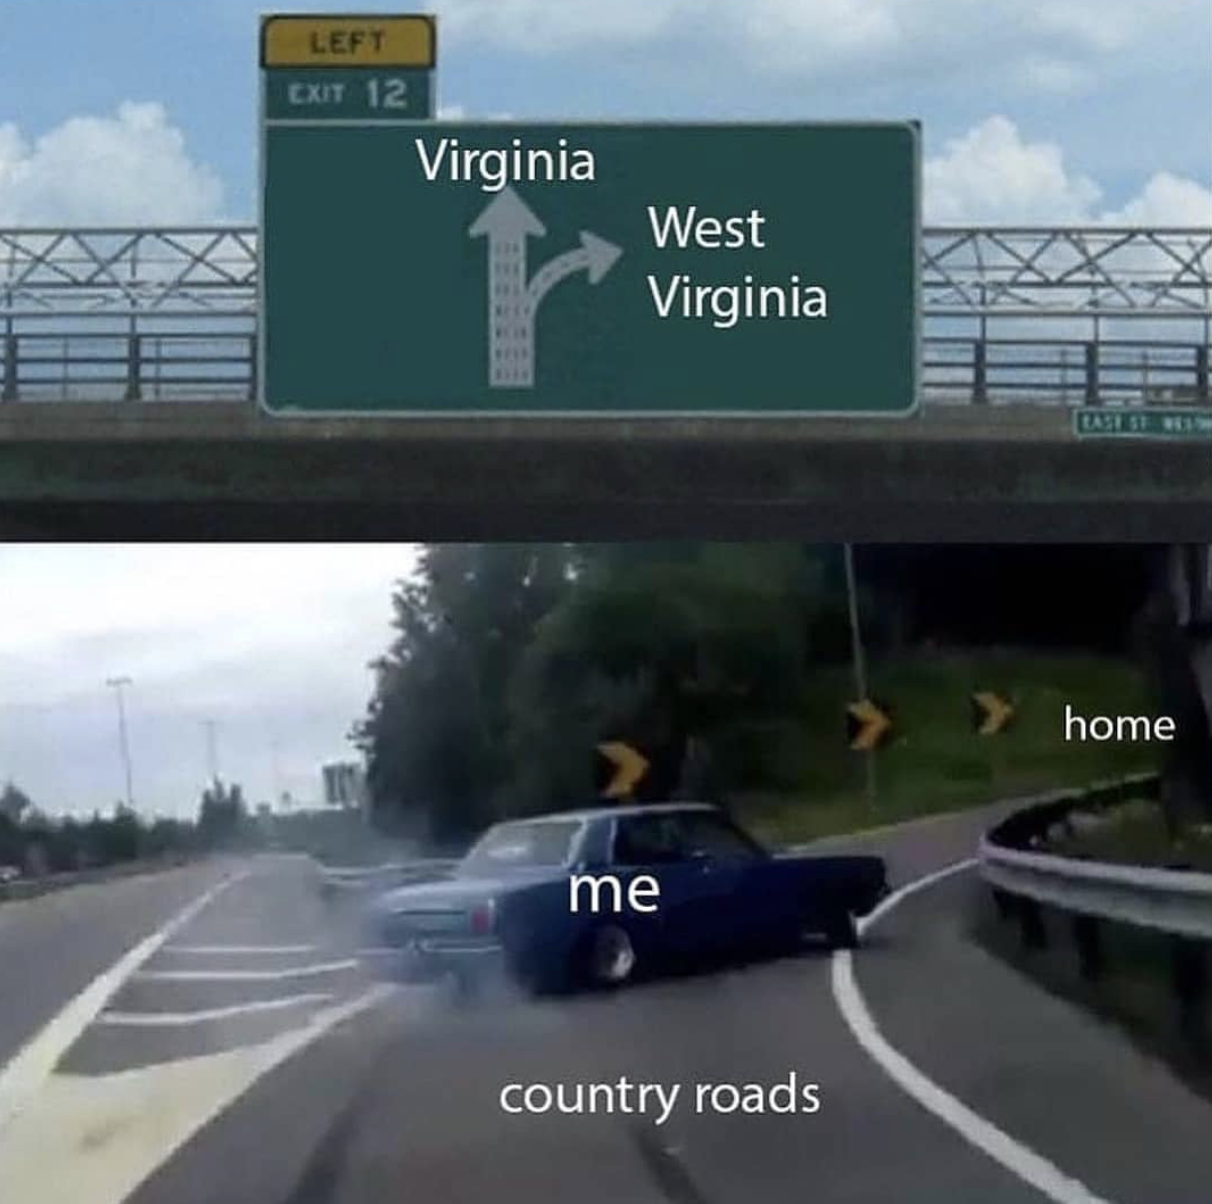 left exit 12 off ramp - Left Cut 12 Virginia West Virginia home me country roads